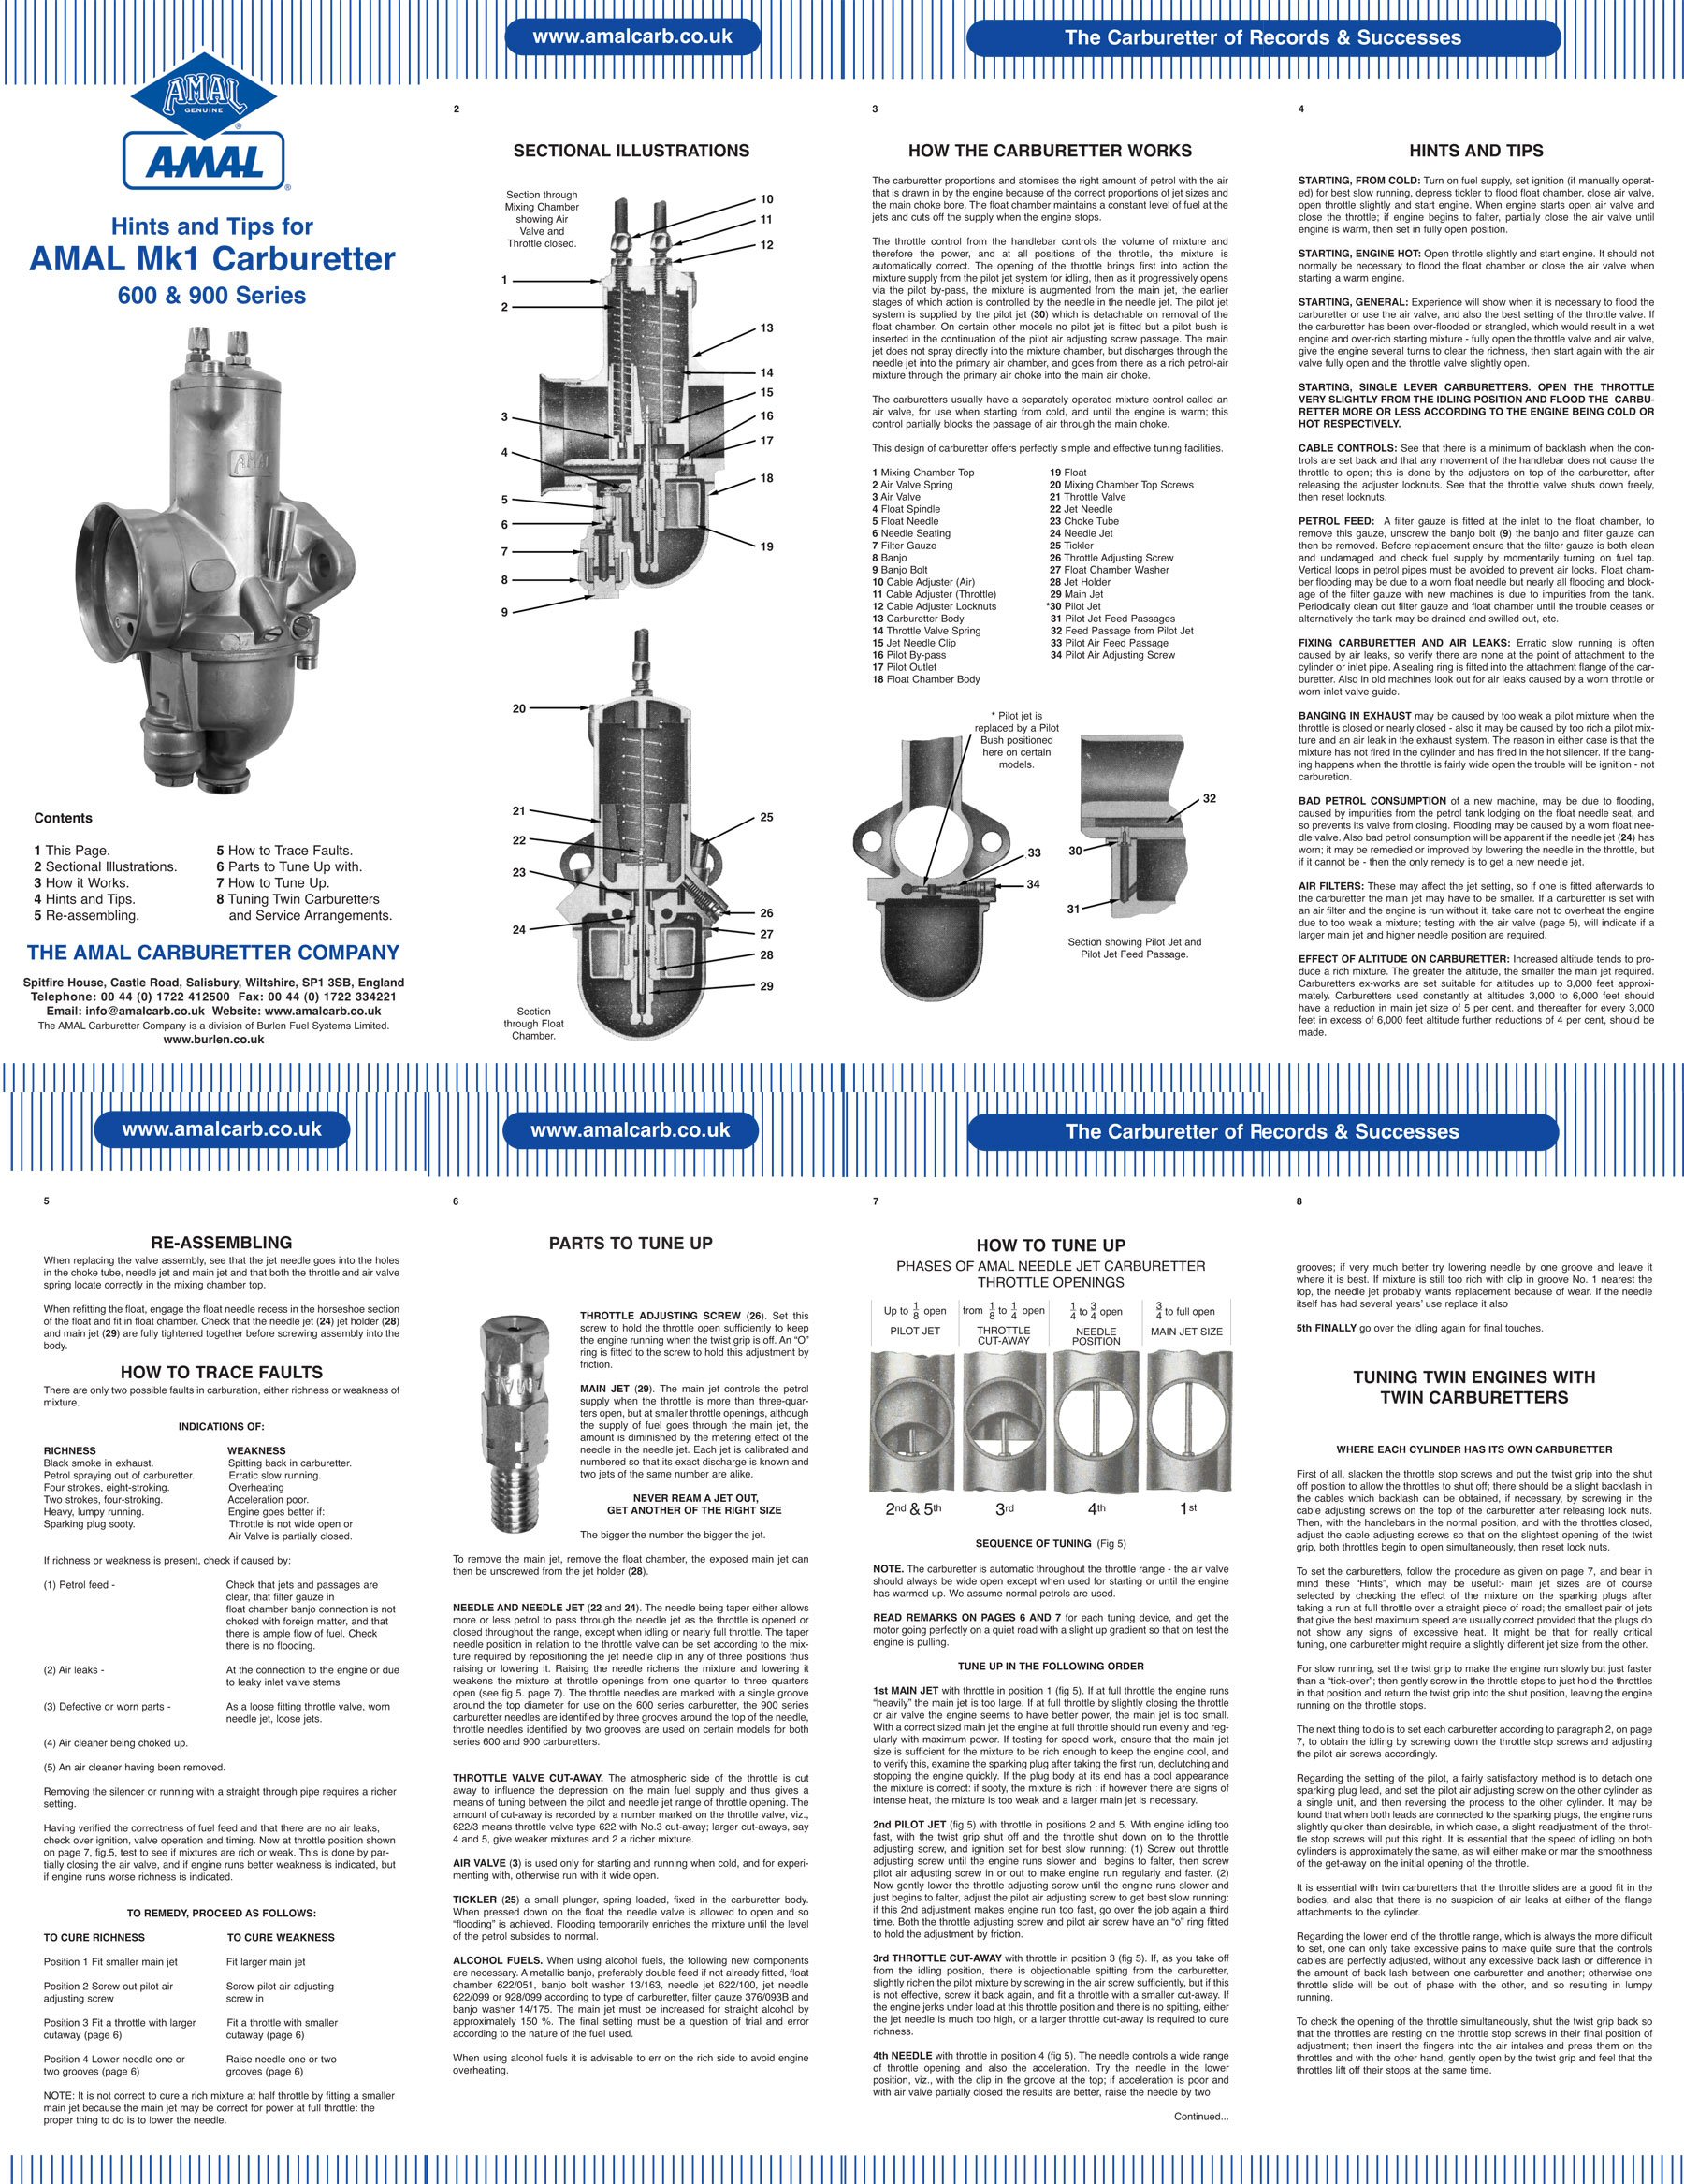 Hints and Tips for Amal Mk1 Carburetor.